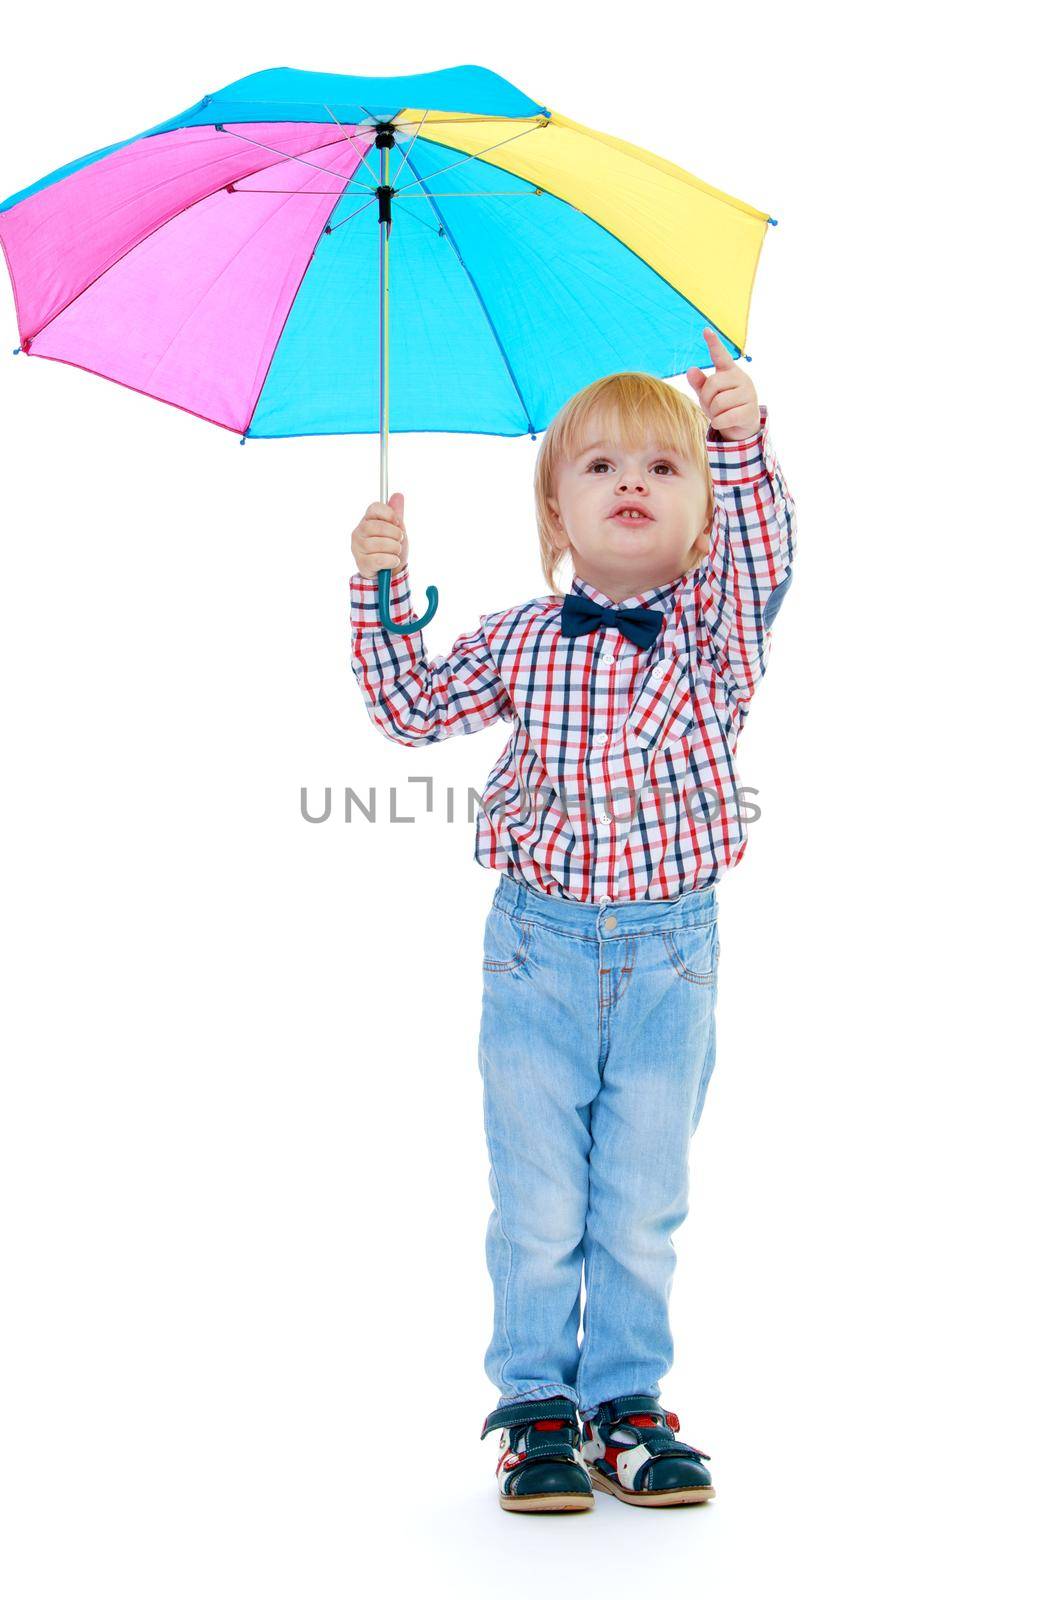 Little boy stands under a colorful umbrella. by kolesnikov_studio